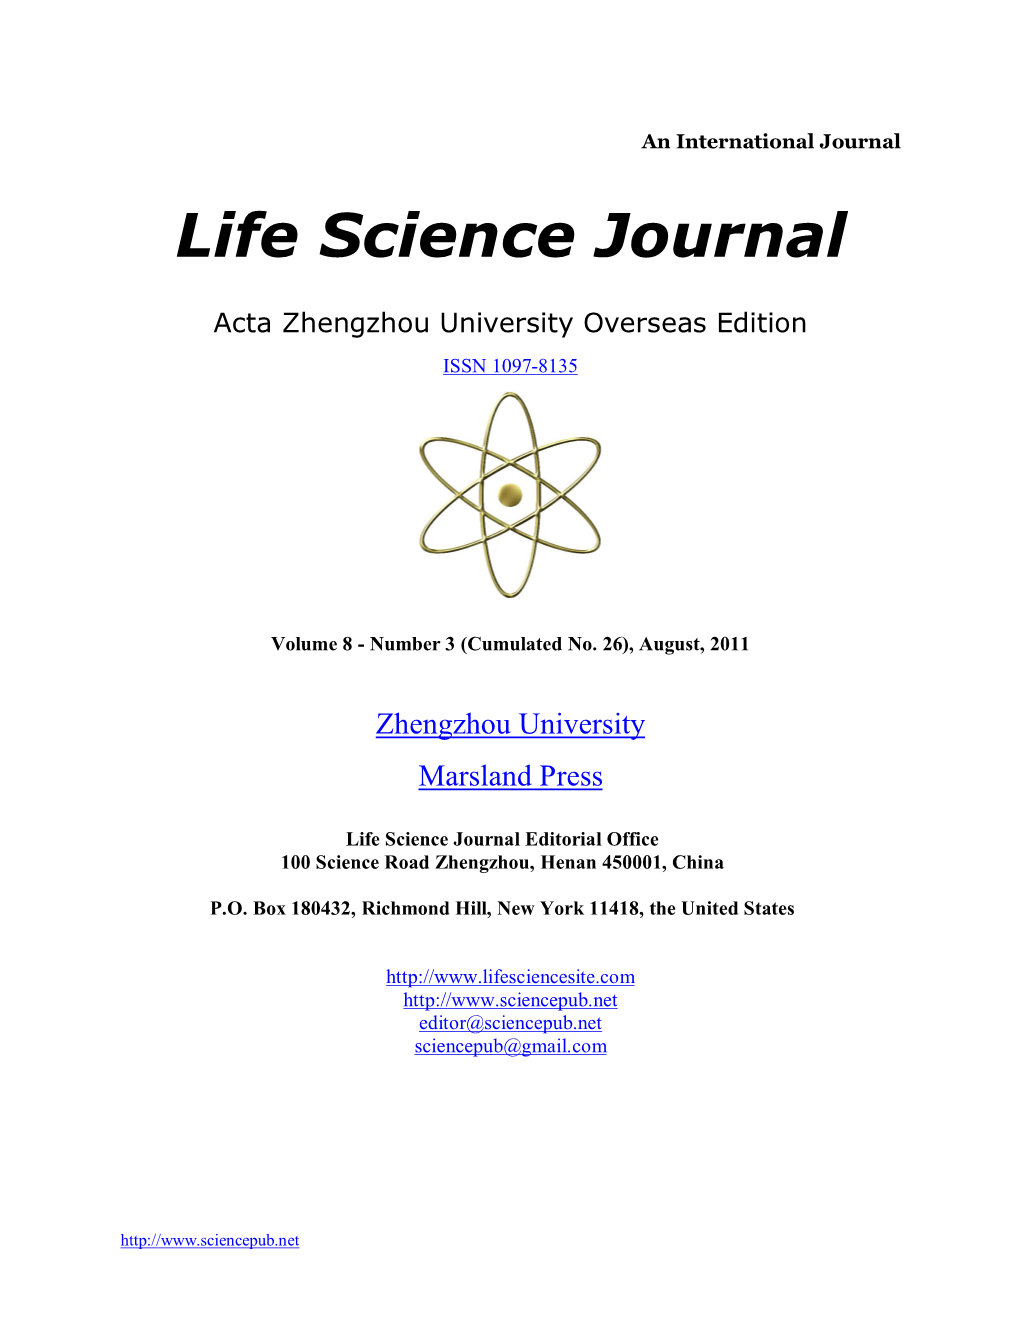 Acta Zhengzhou University Overseas Edition ISSN 1097-8135